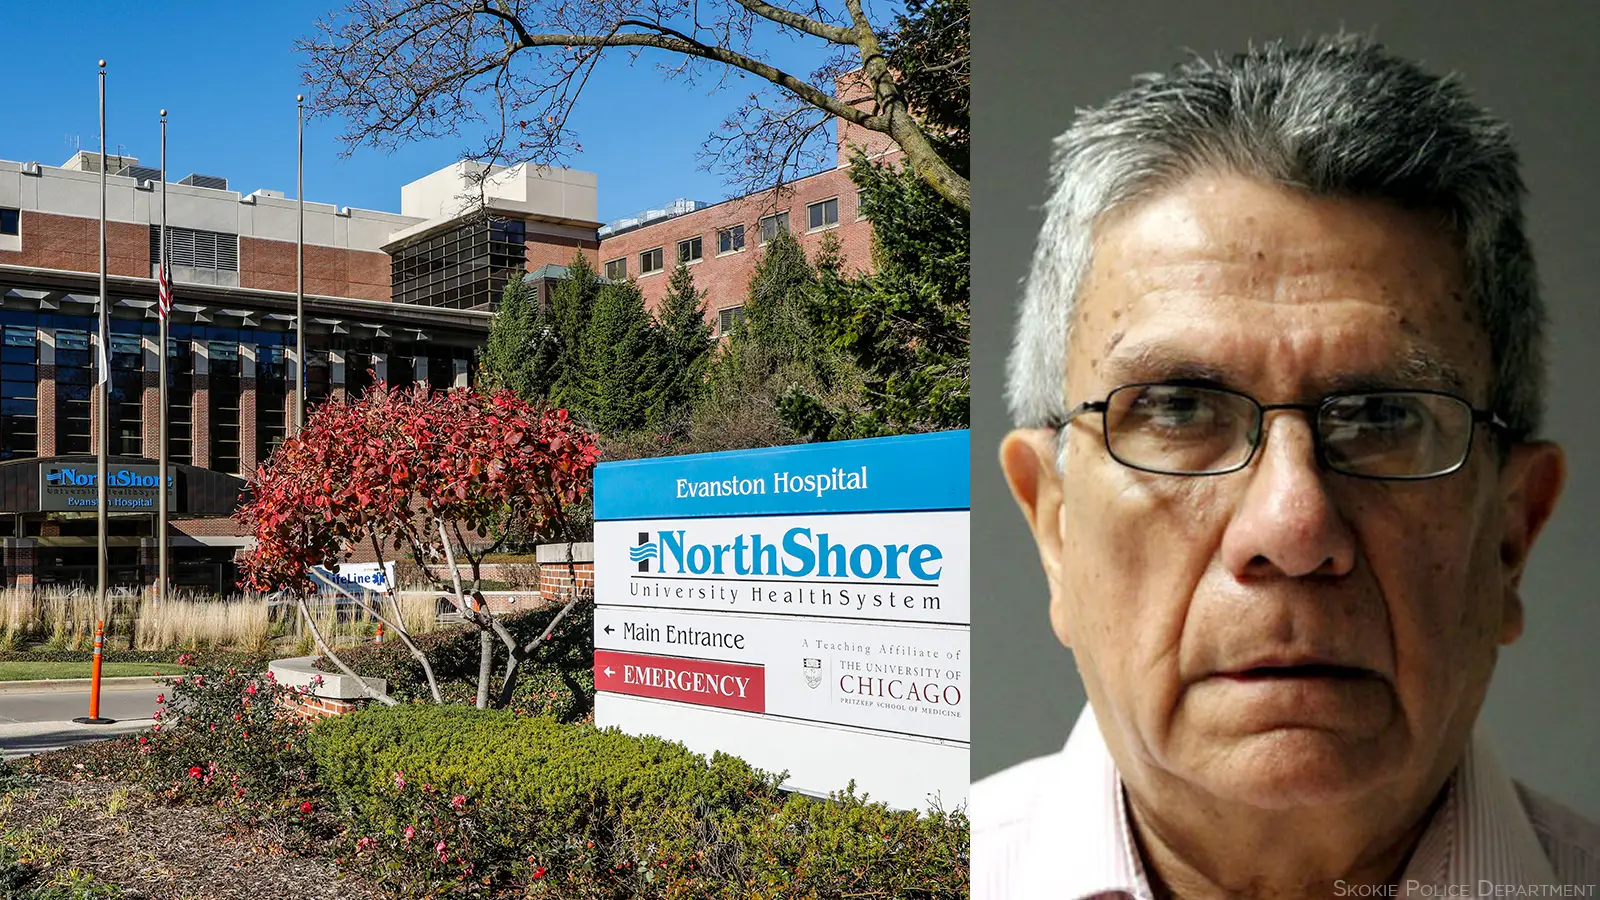 Jane Doe 33 alleges sexual assault by Gynecologist Fabio Ortega, NorthShore University HealthSystem